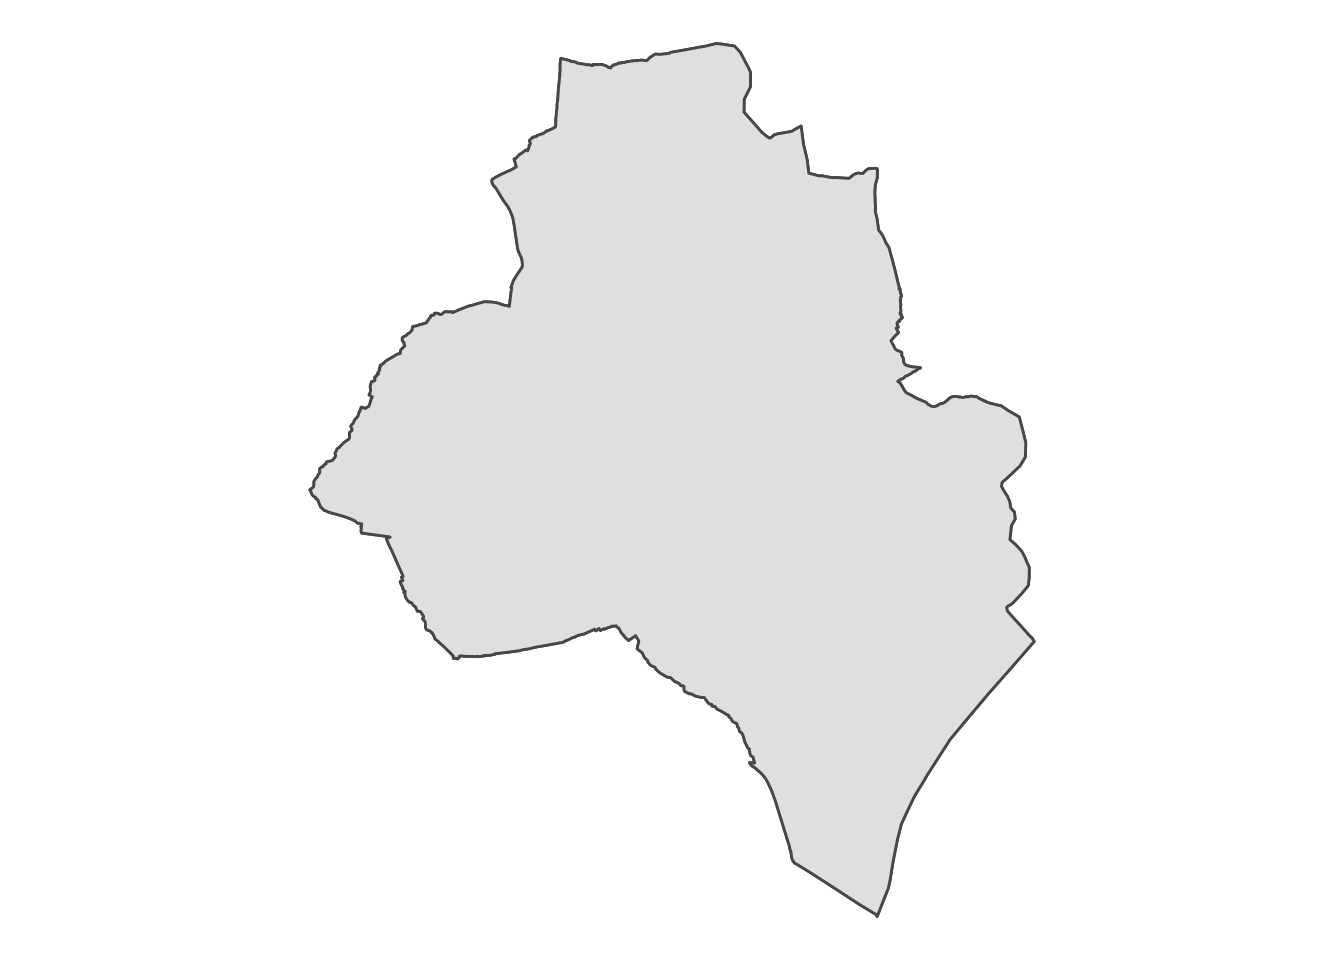 A grey outline of Kampala, shaded light grey.